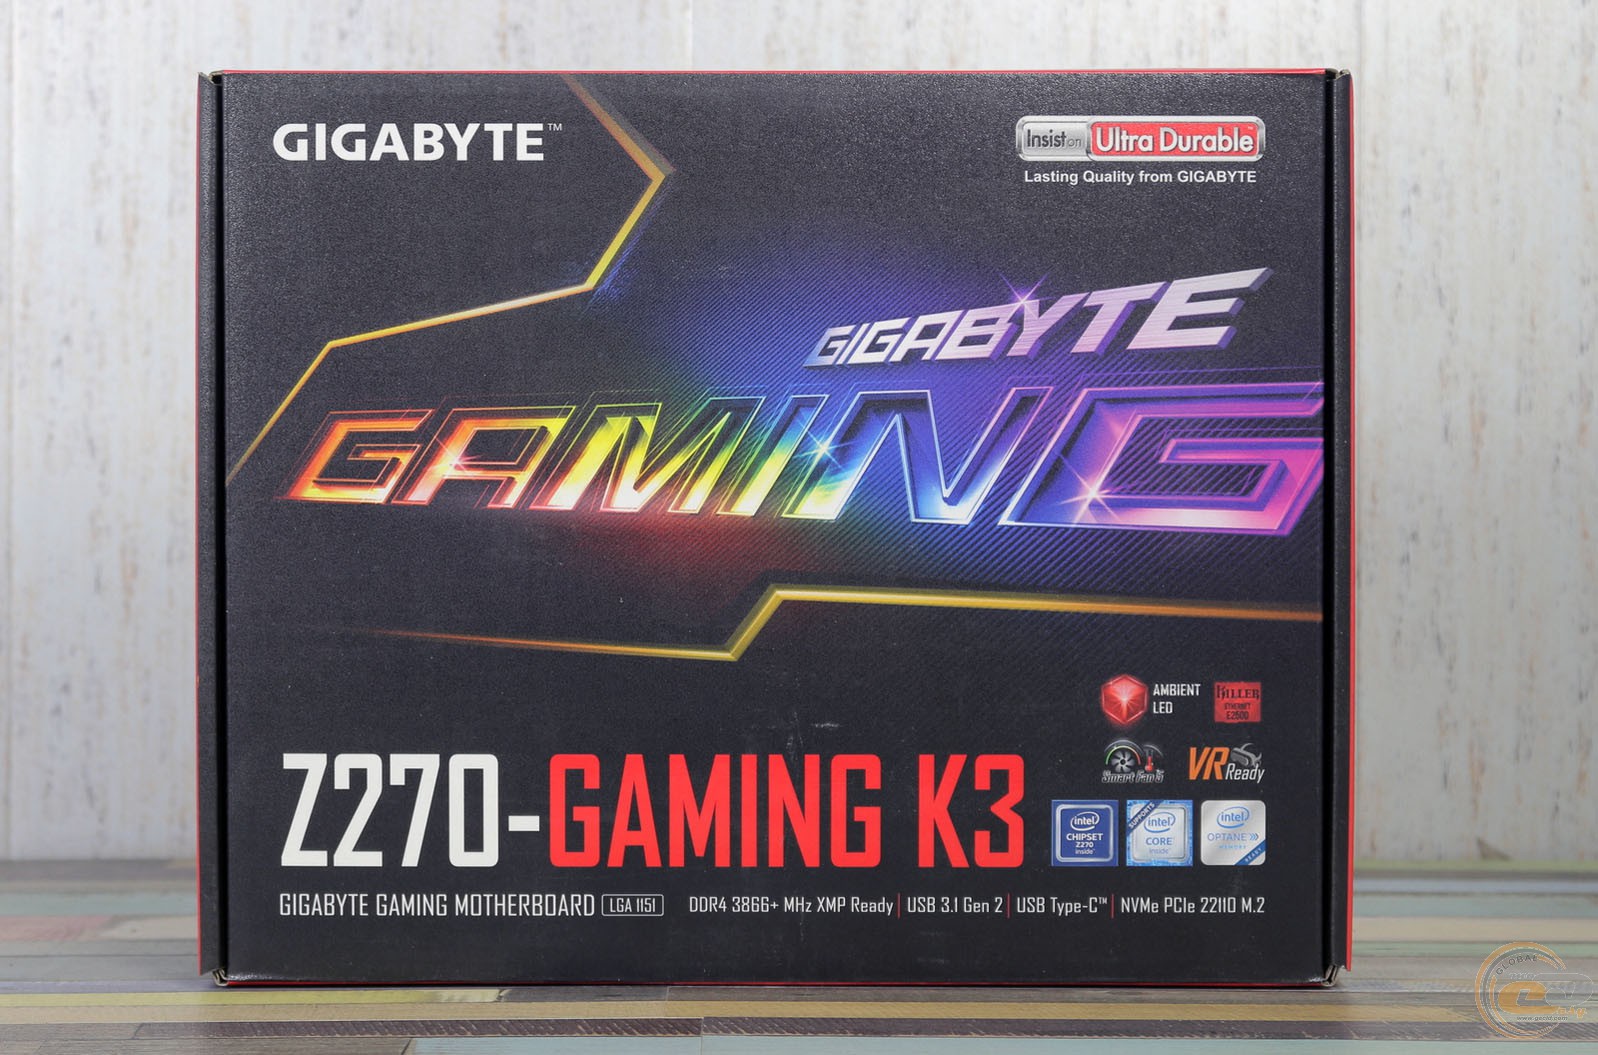 Gigabyte z270 Gaming k3. Gigabyte ga-z270-Gaming k3. Gigabyte Ultra durable Core 2 Dua. Gigabyte insist on Ultra durable желтый цвет BIOS. Gigabyte gaming k3